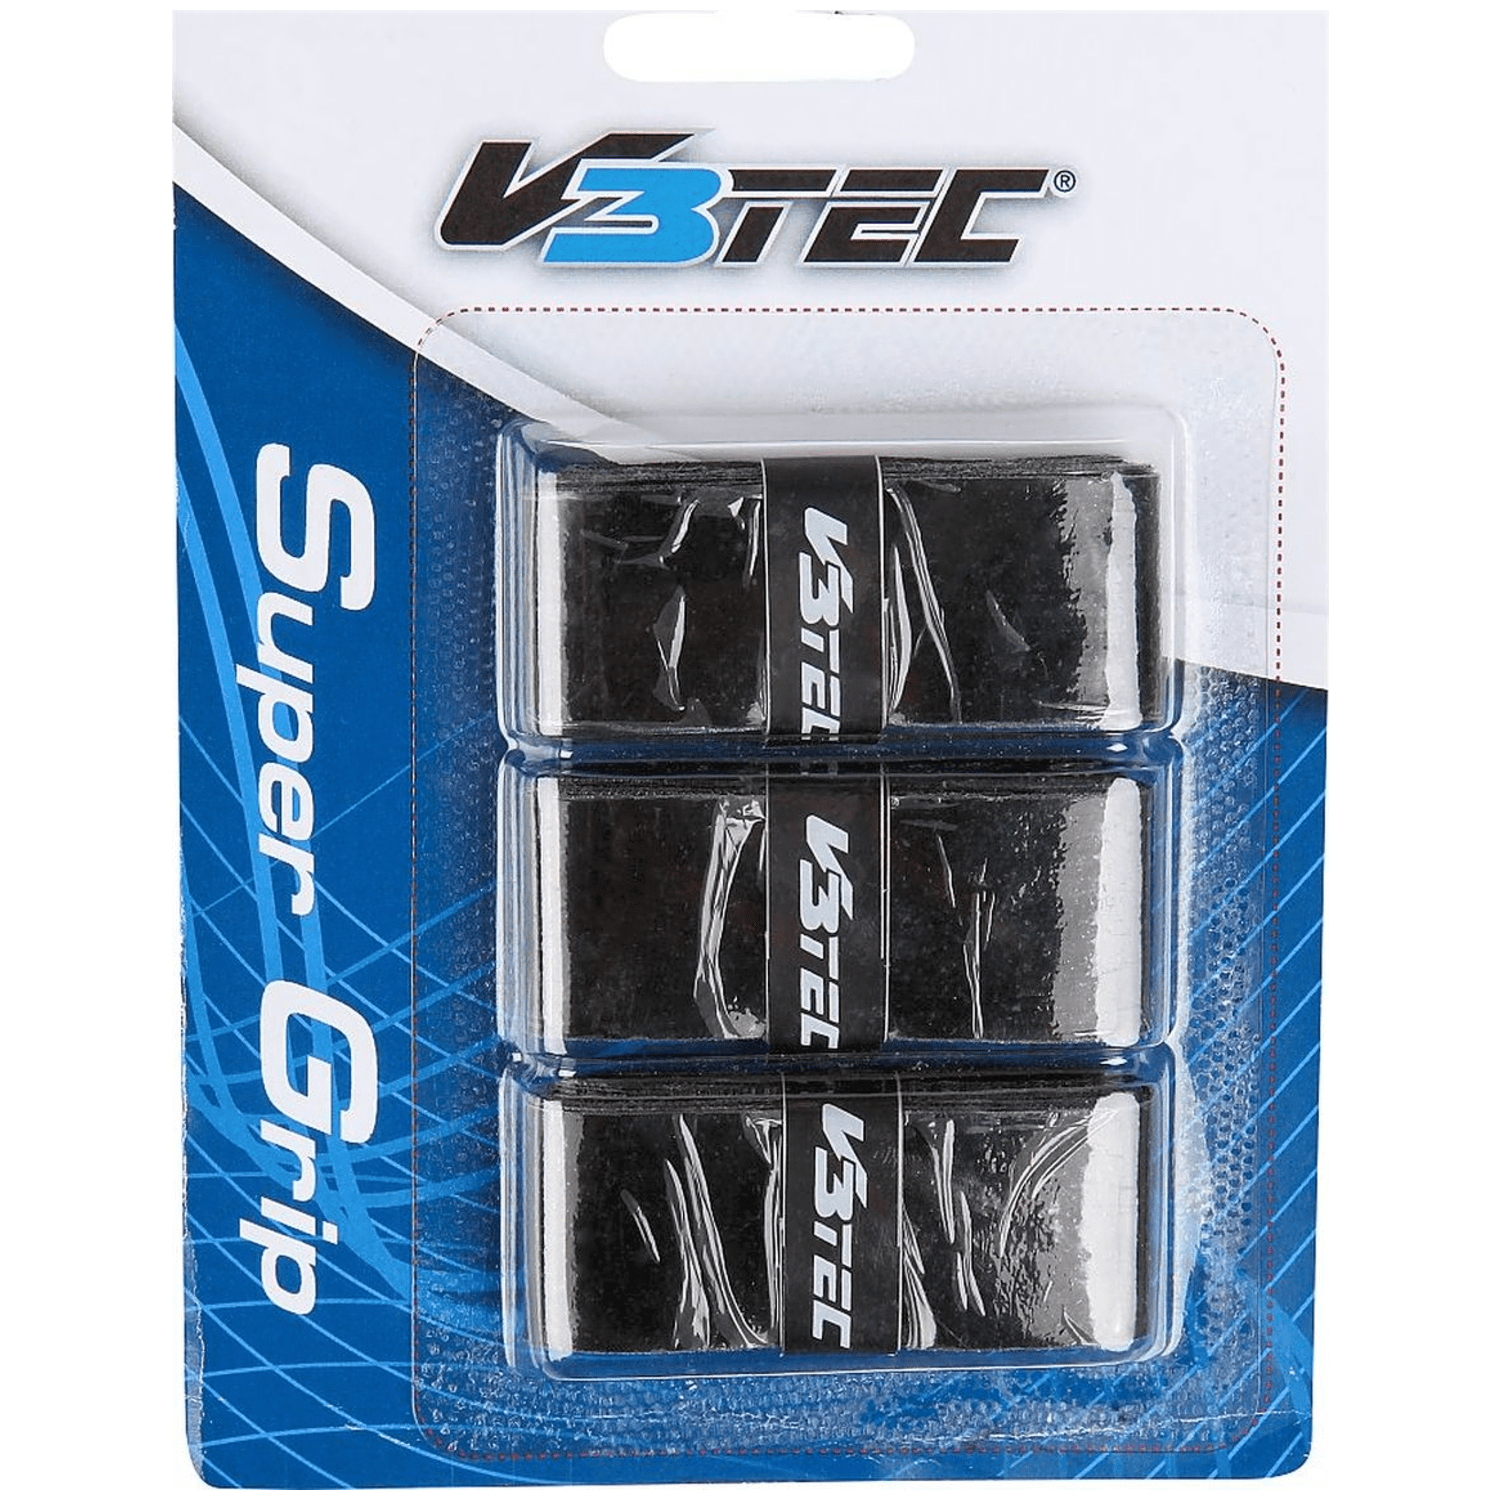 V3Tec Super Grip Überband Unisex